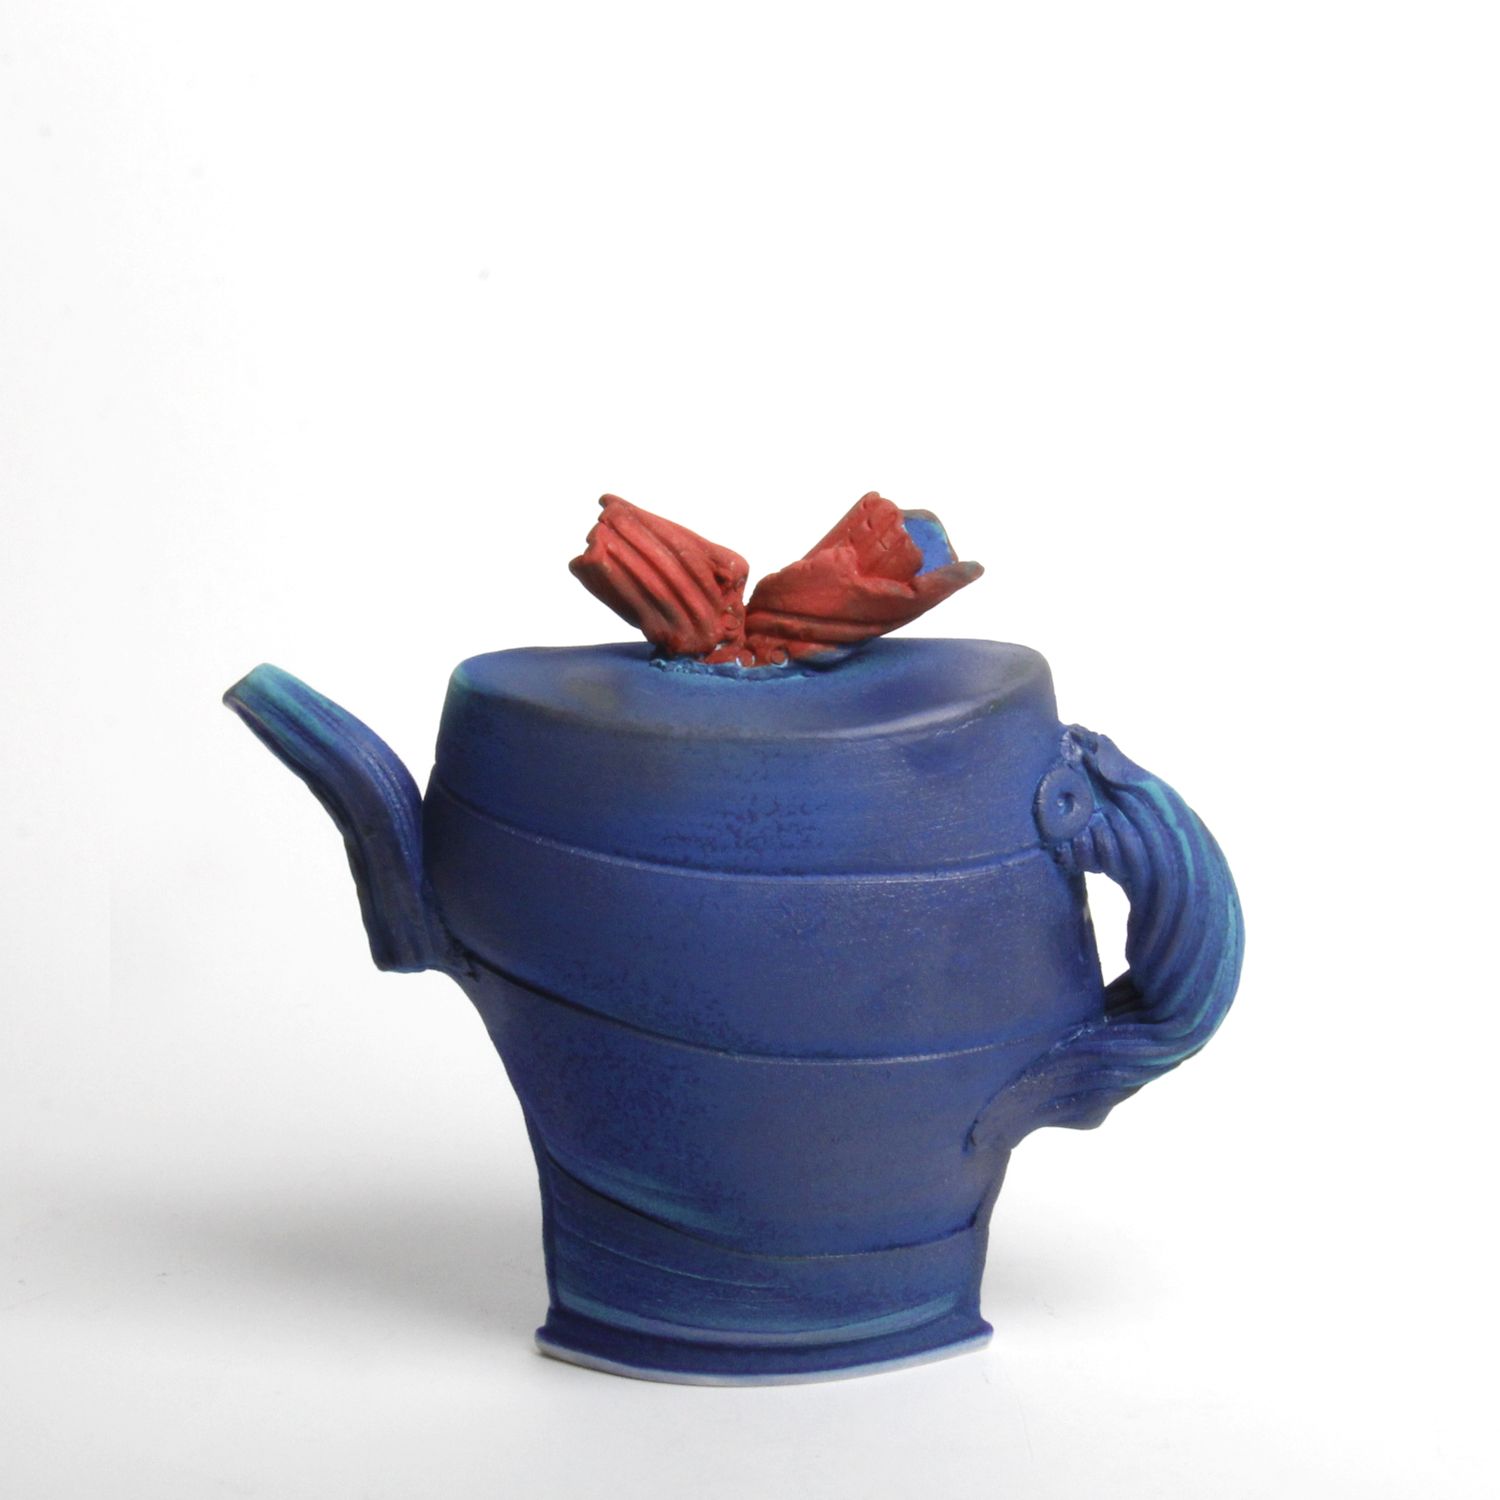 Shu-Chen Cheng: Blue Teapot Sculpture Product Image 2 of 2